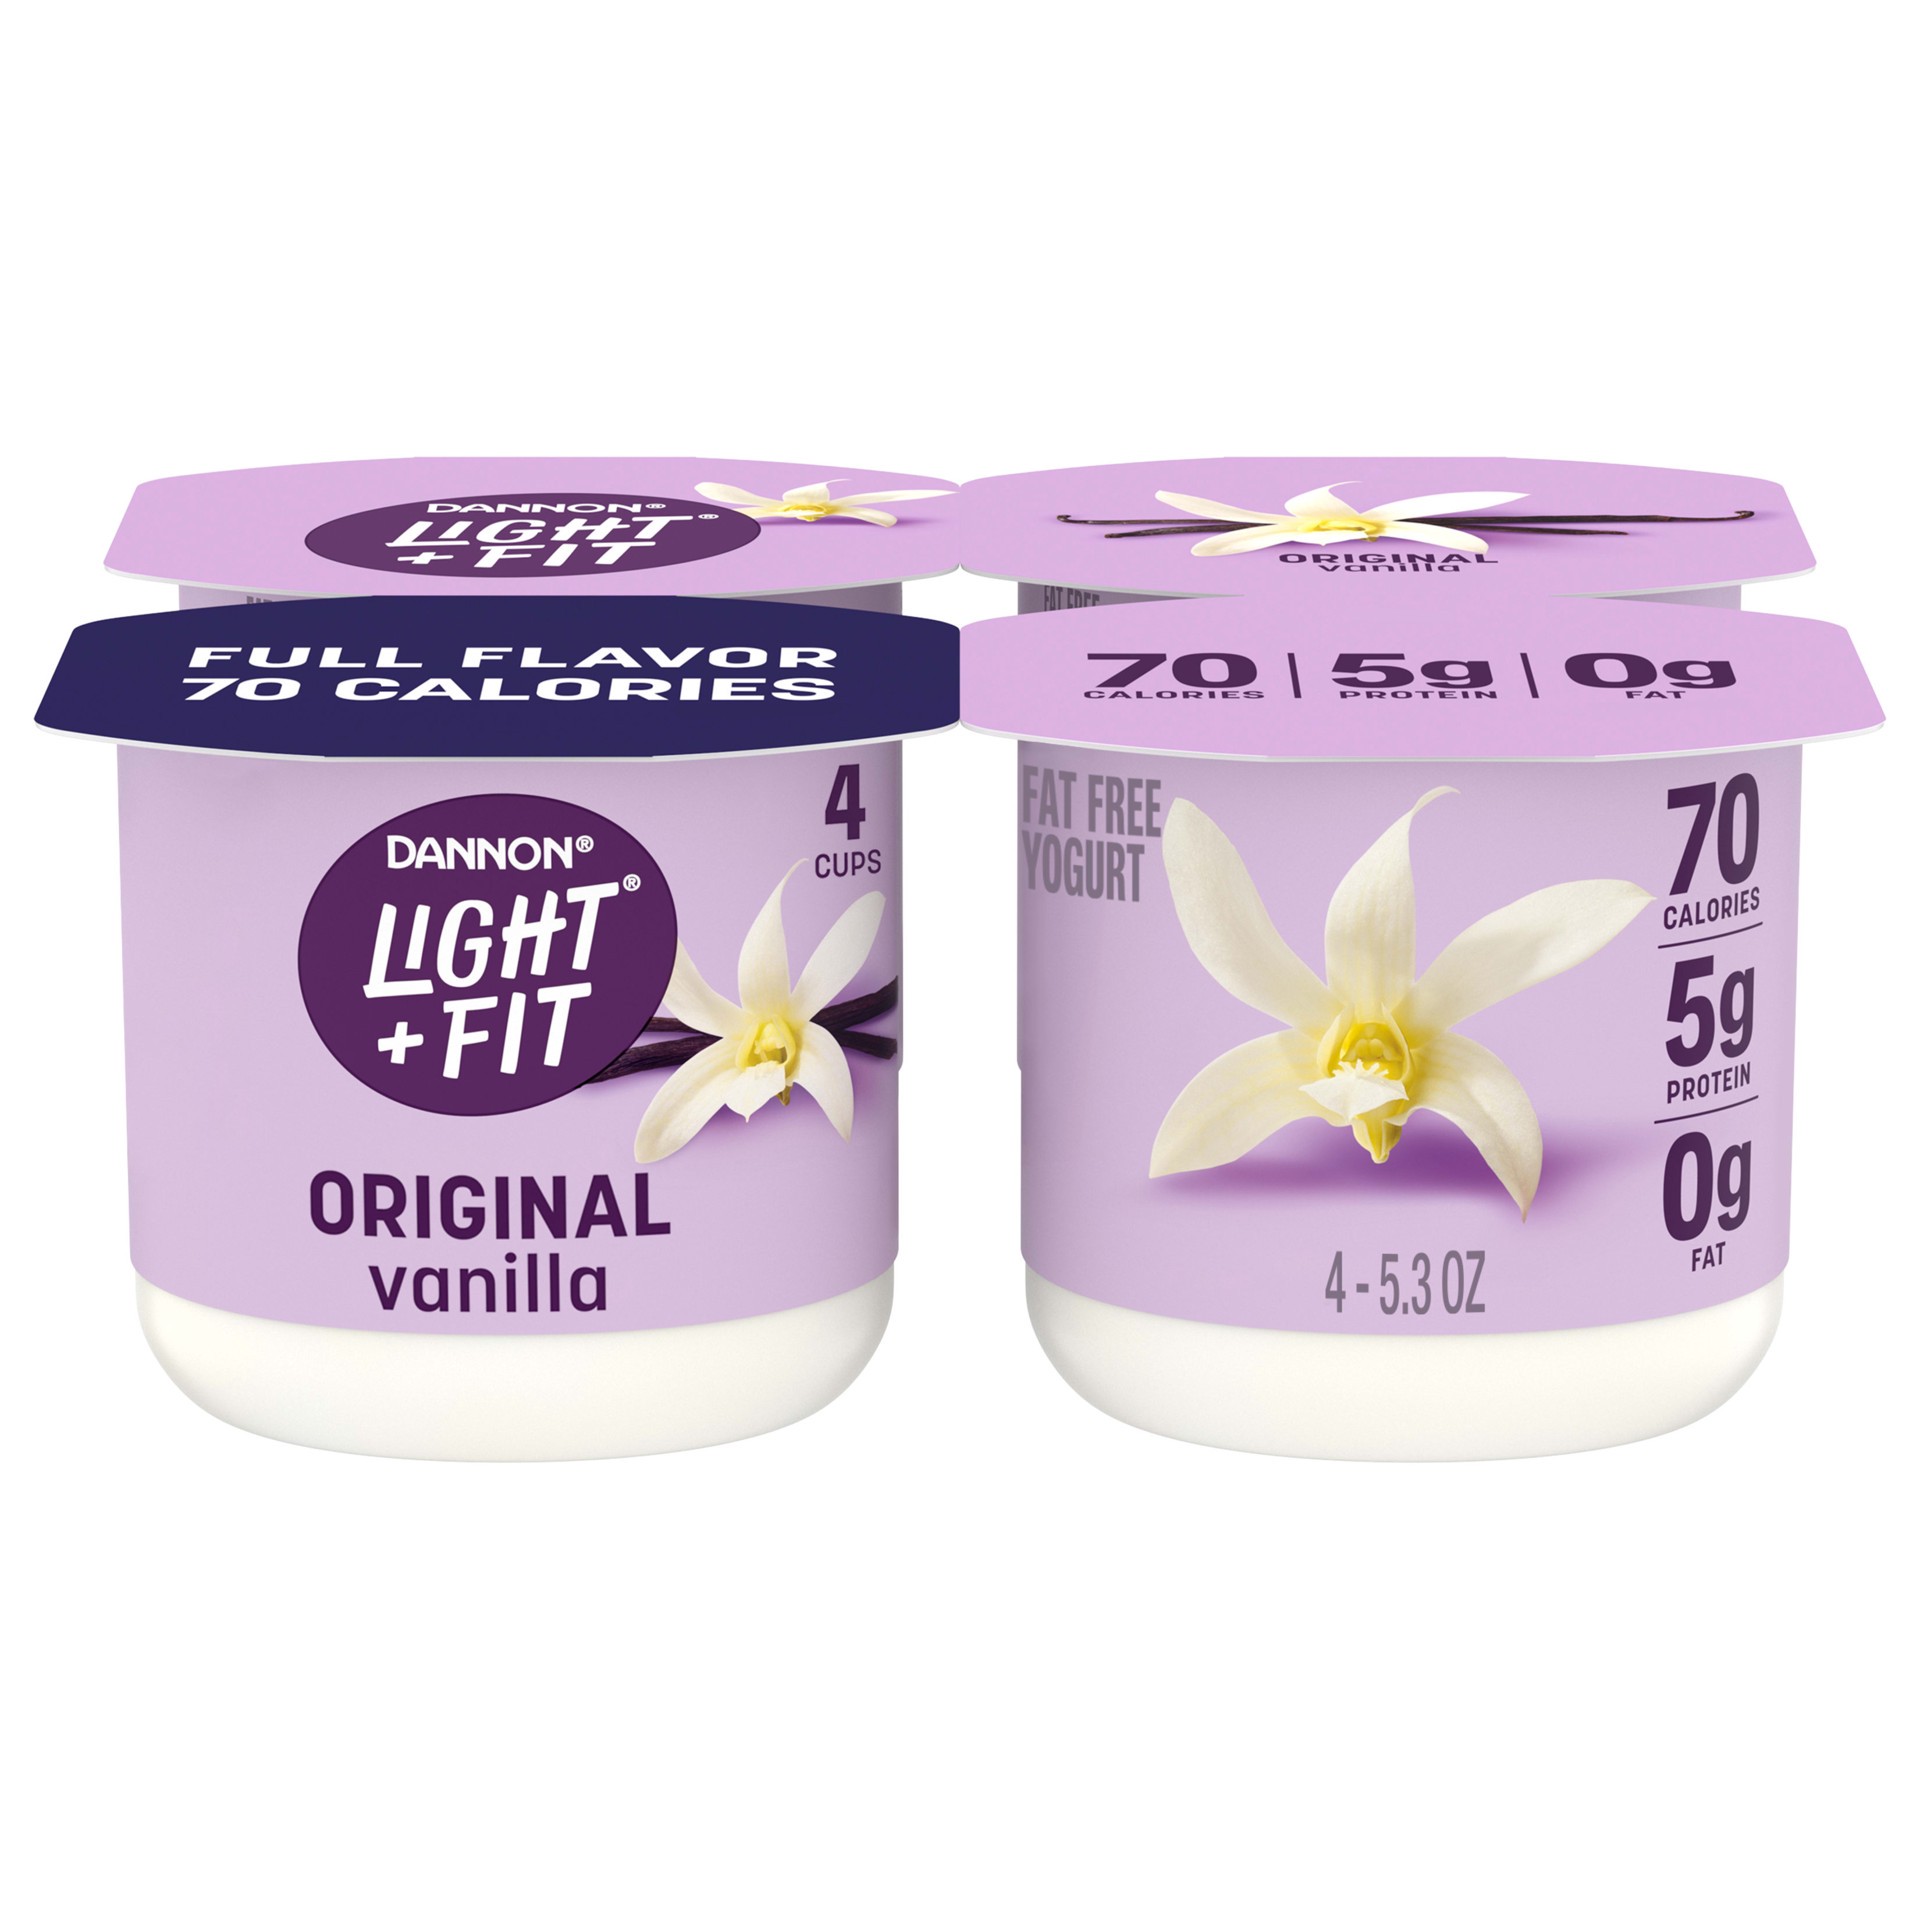 slide 1 of 5, Light + Fit Dannon Light + Fit Vanilla Original Nonfat Yogurt Pack, 0 Fat and 70 Calories, Creamy and Delicious Vanilla Yogurt, 4 Ct, 5.3 OZ Cups, 5.3 oz